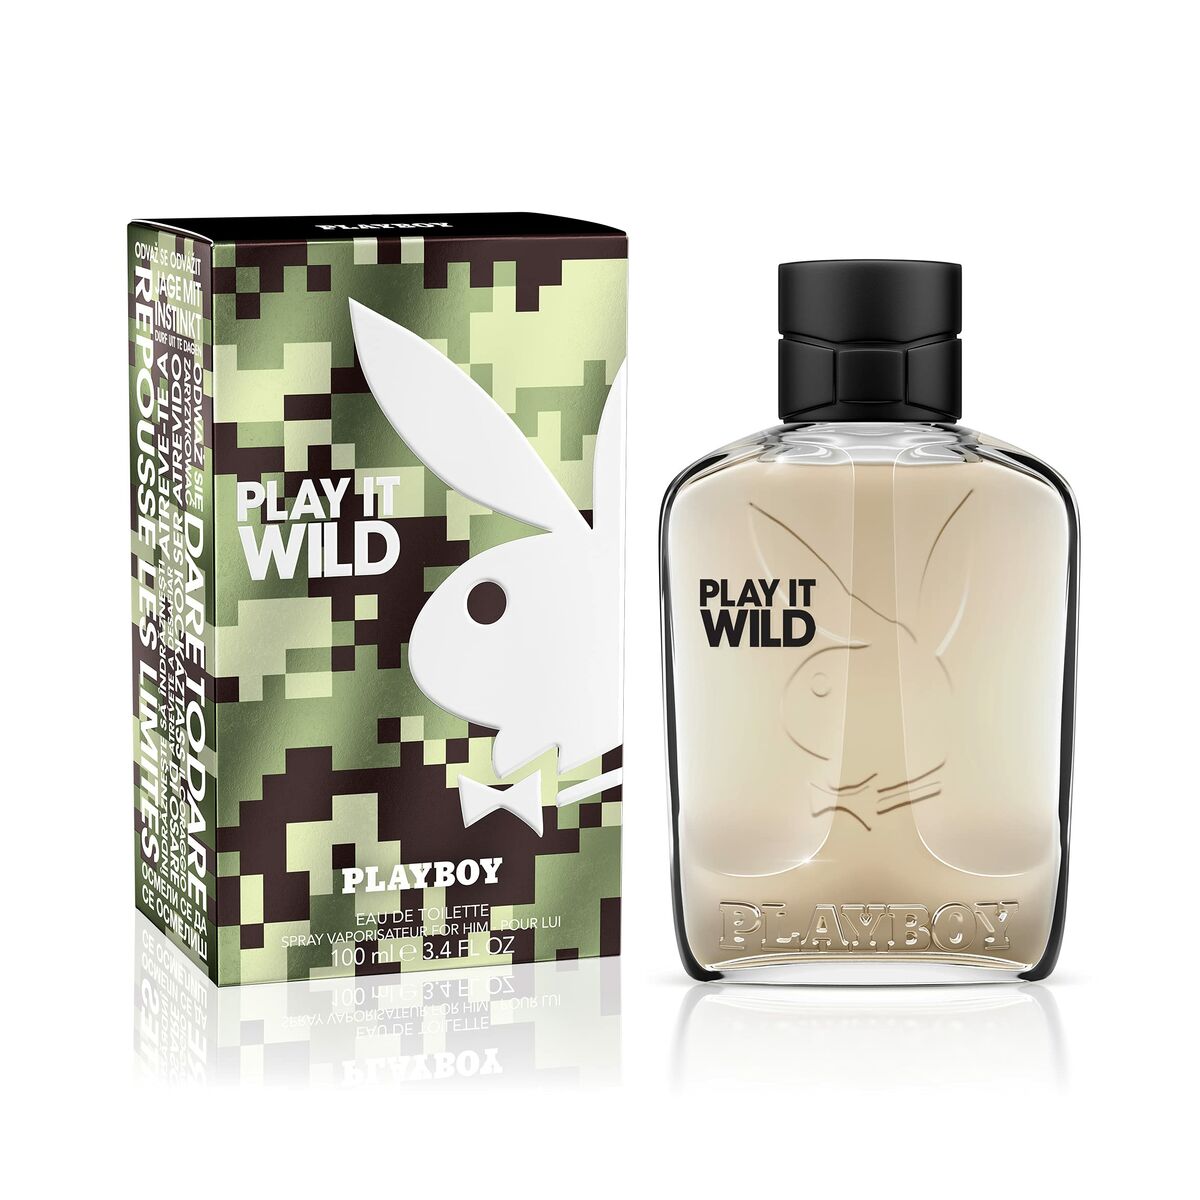 Parfum Homme Playboy EDT Play It Wild 100 ml